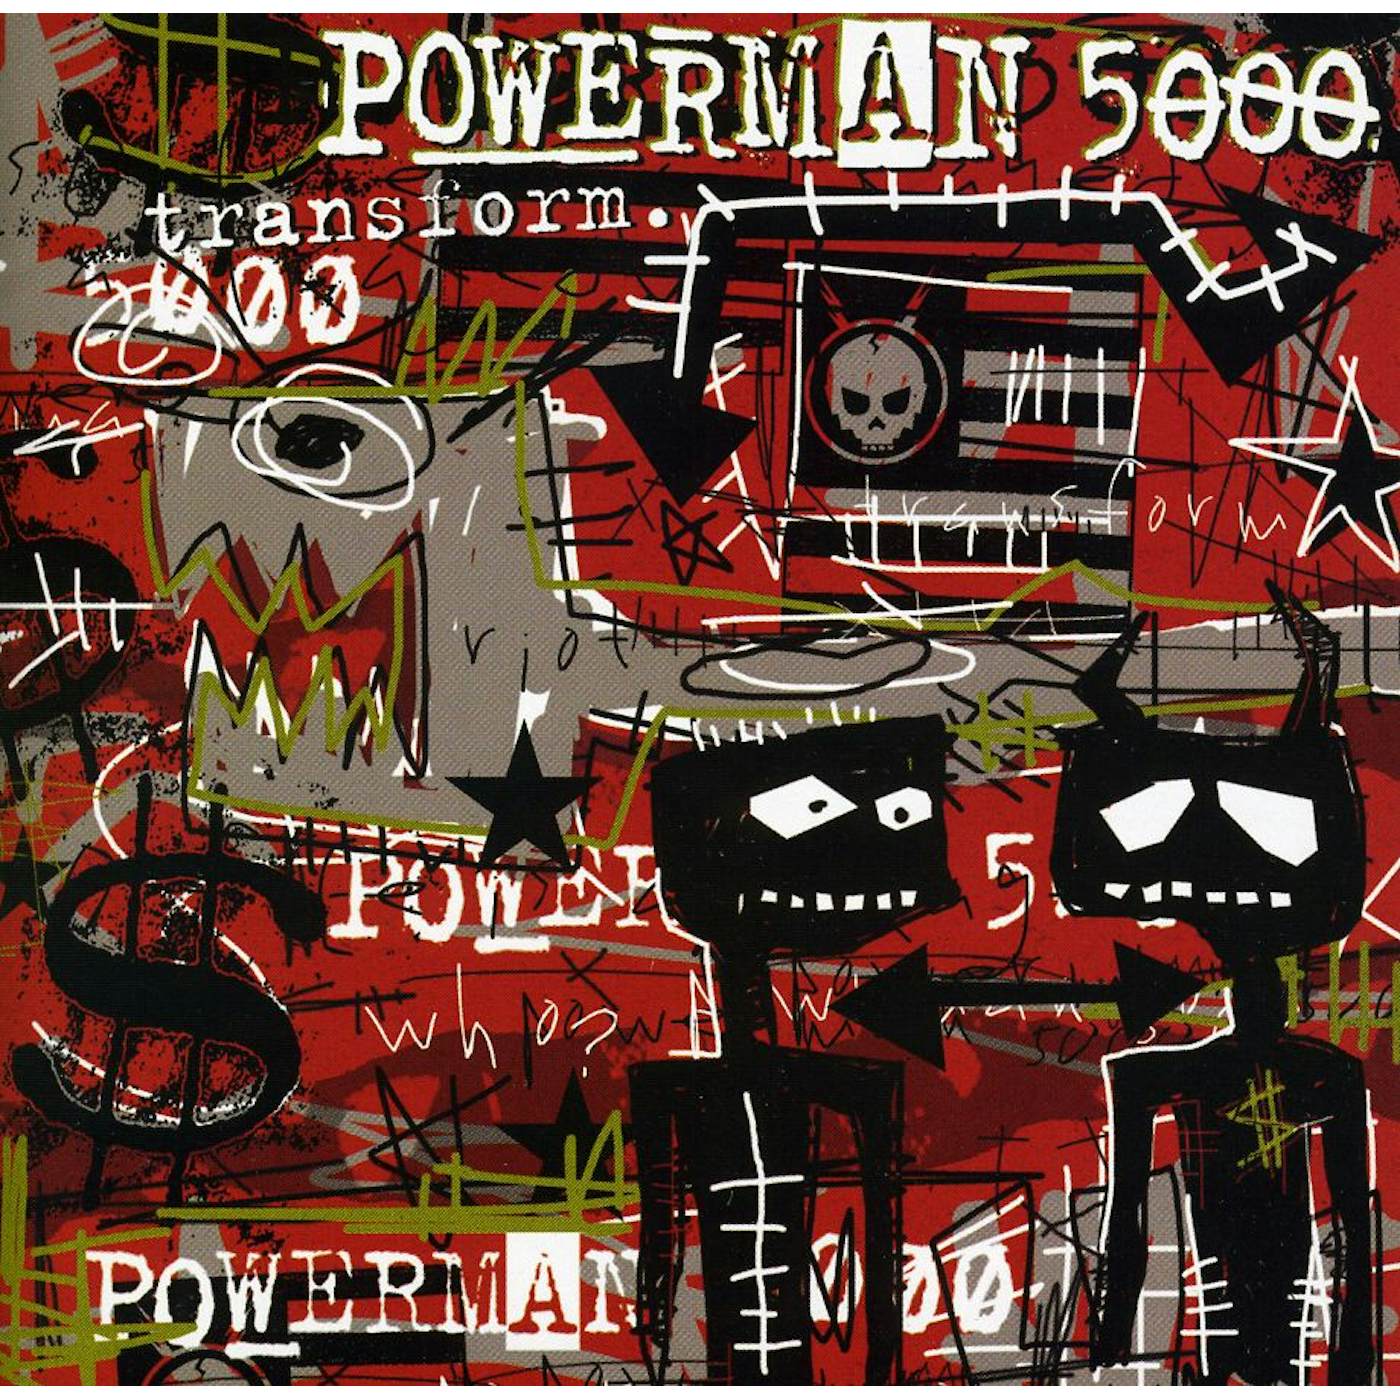 Powerman 5000 TRANSFORM CD